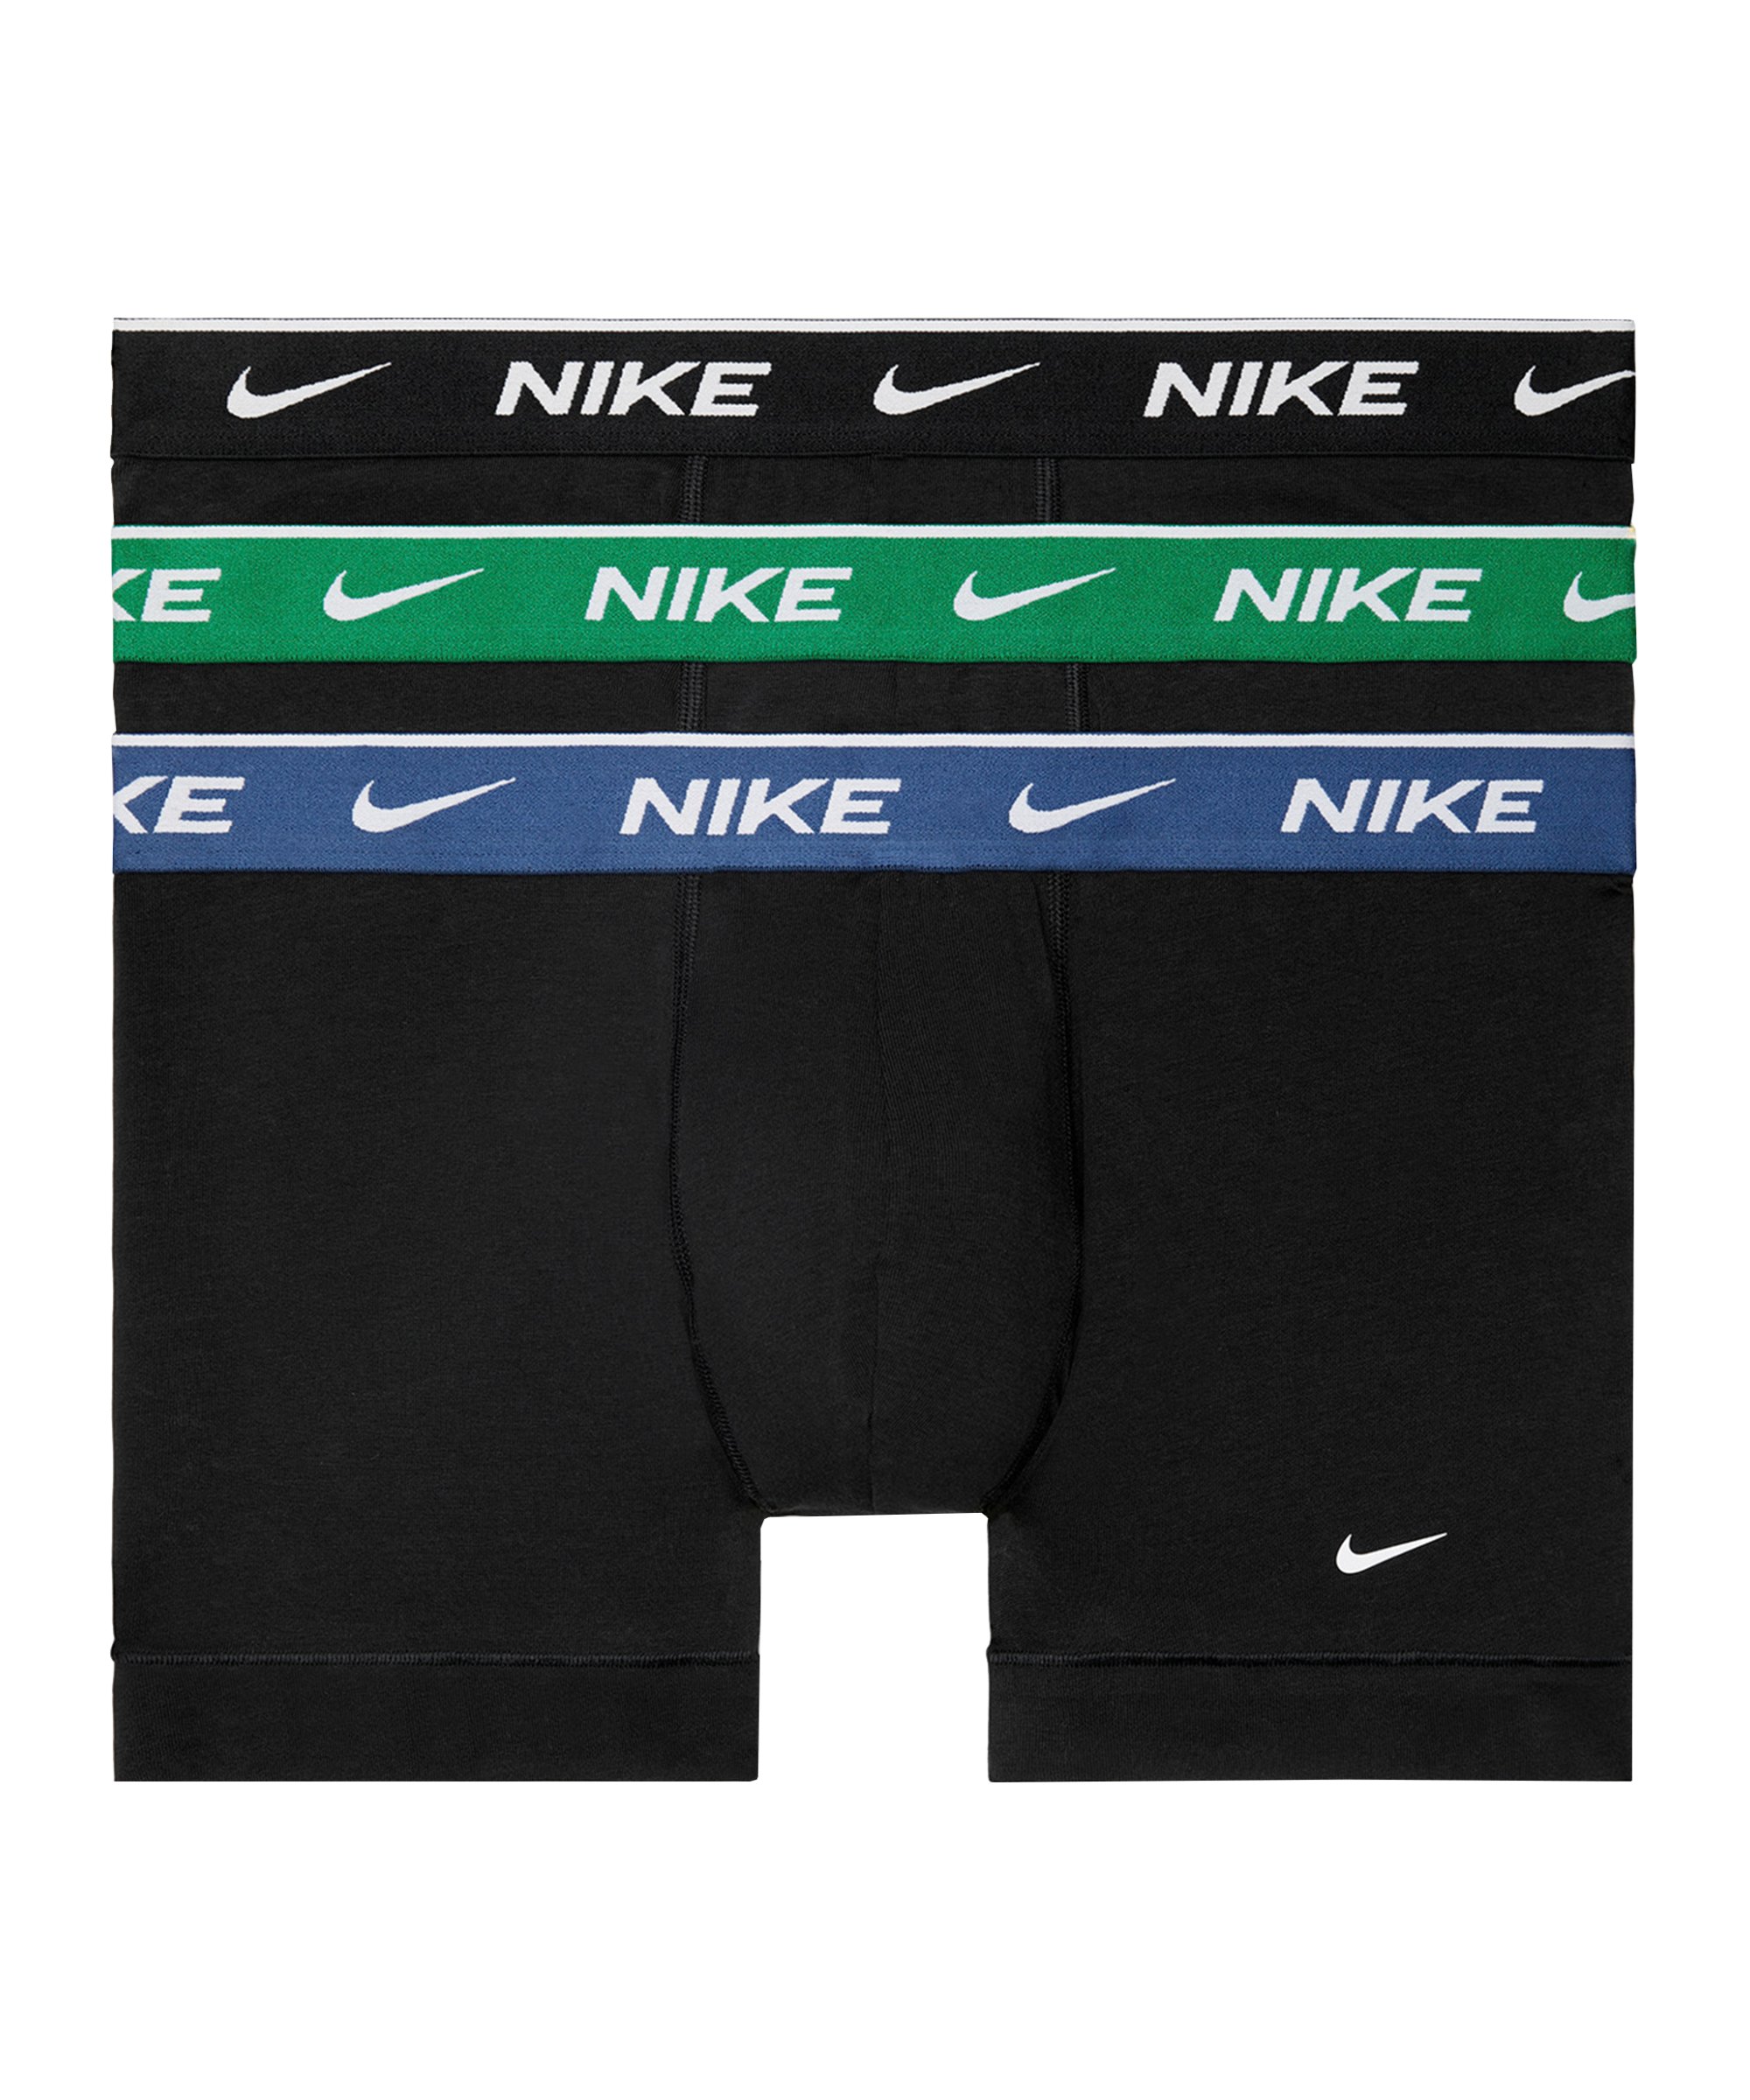 Nike Cotton Trunk Boxershort 3er Pack F1M8 - mehrfarbig